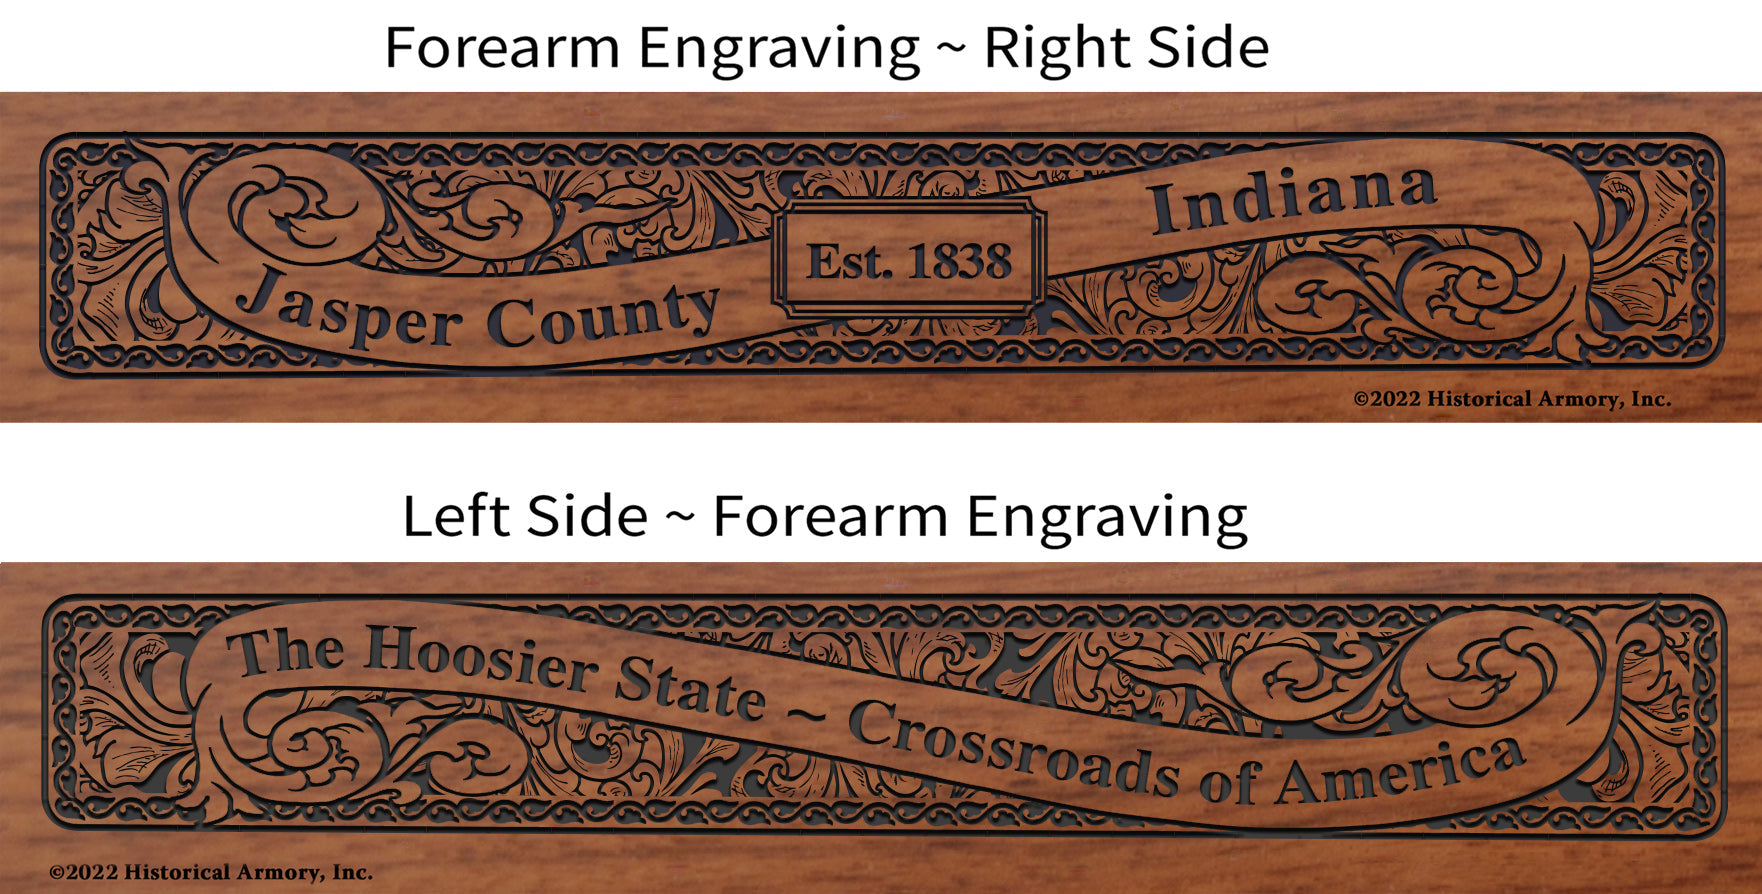 Jasper County Indiana Engraved Rifle Forearm